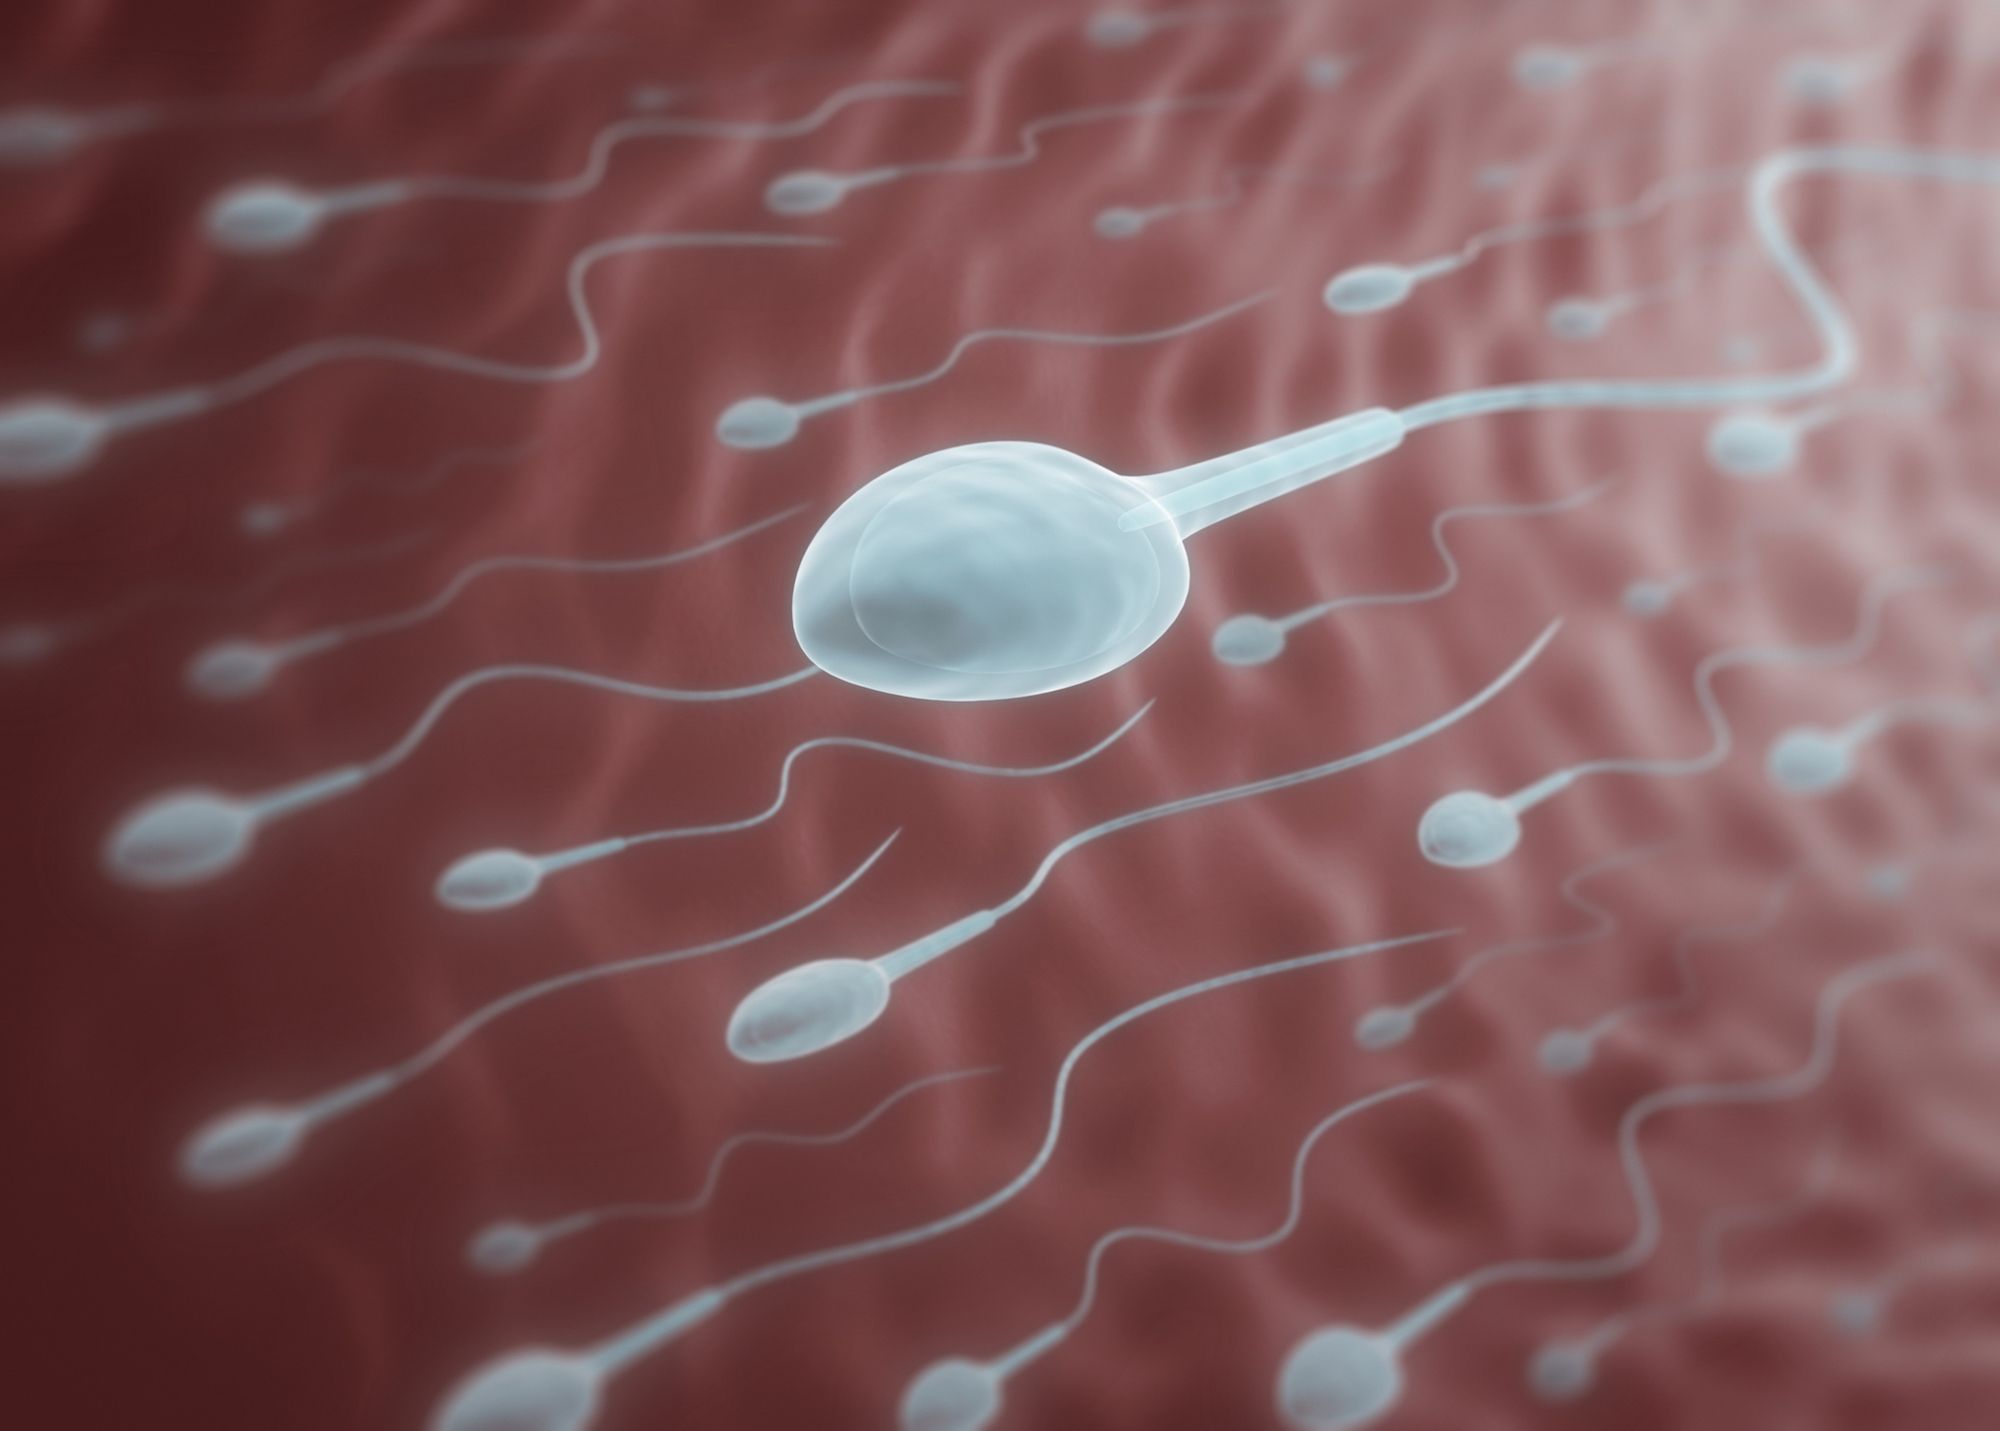 Canabis sperm count